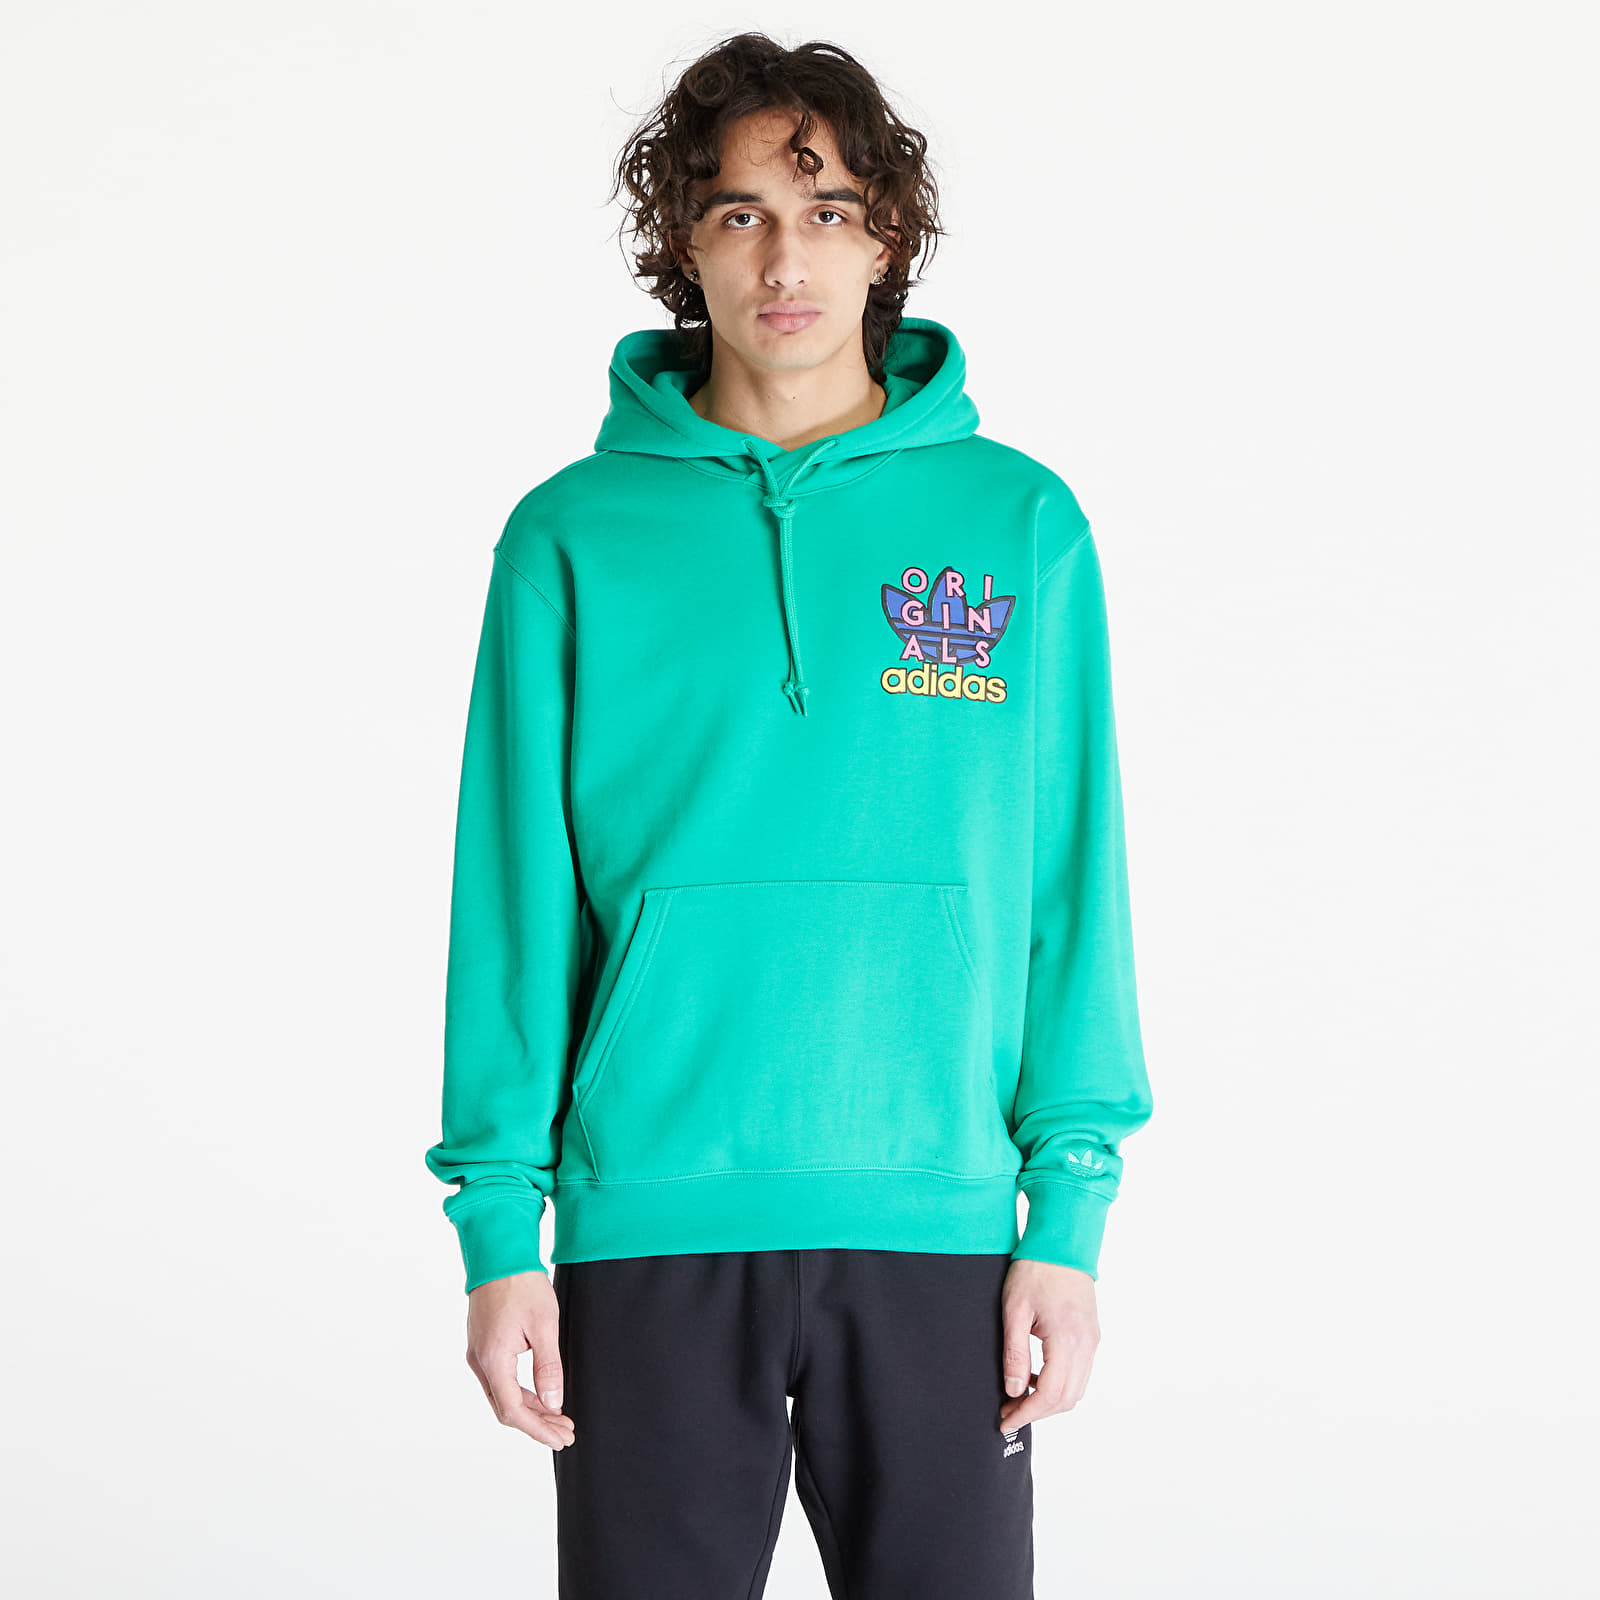 adidas Originals - trefoil hoodie semi screaming green